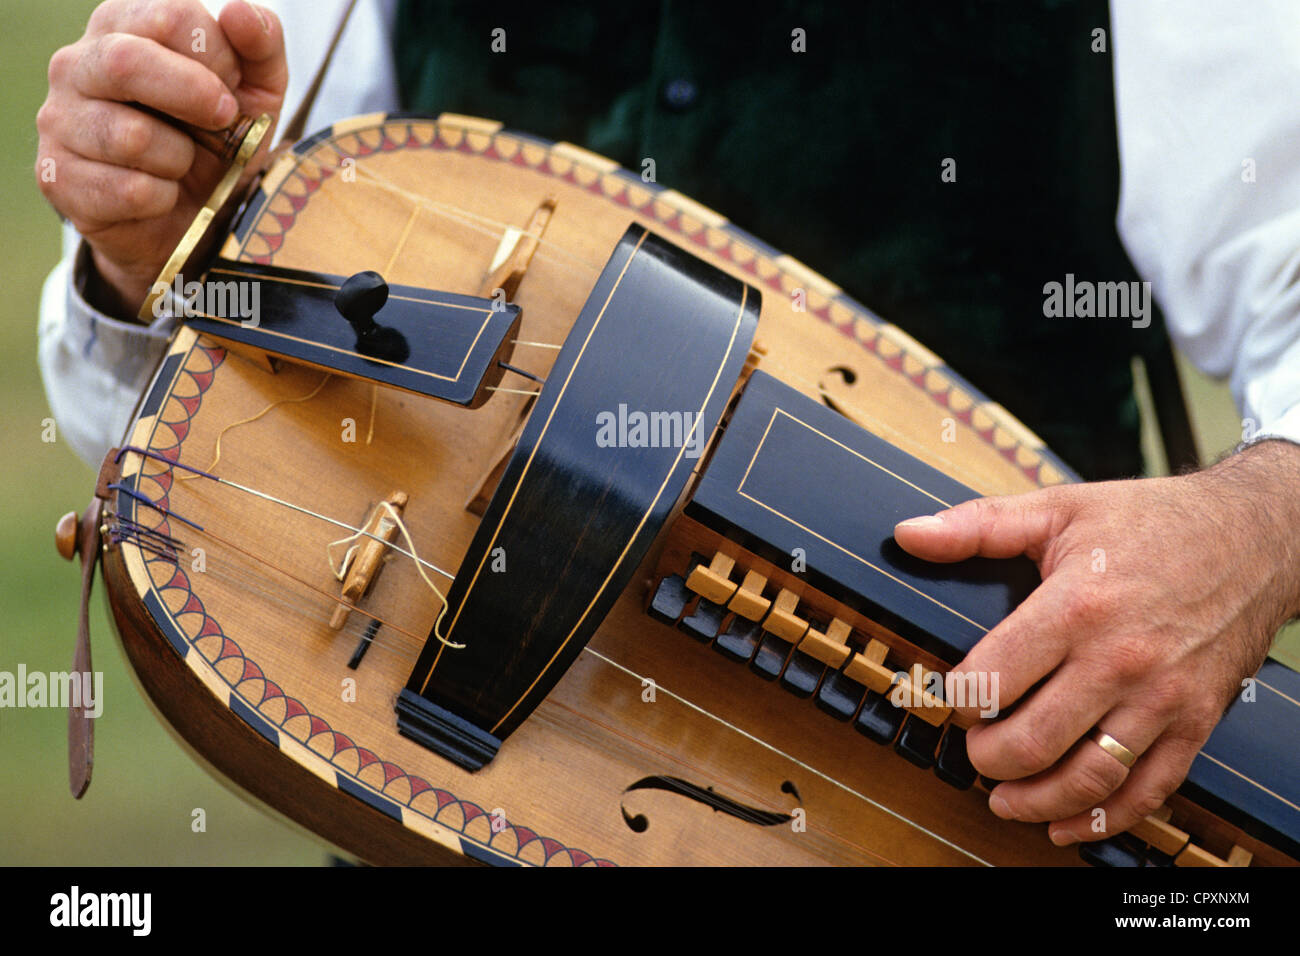 Instrumento vielle fotografías e imágenes de alta resolución - Alamy